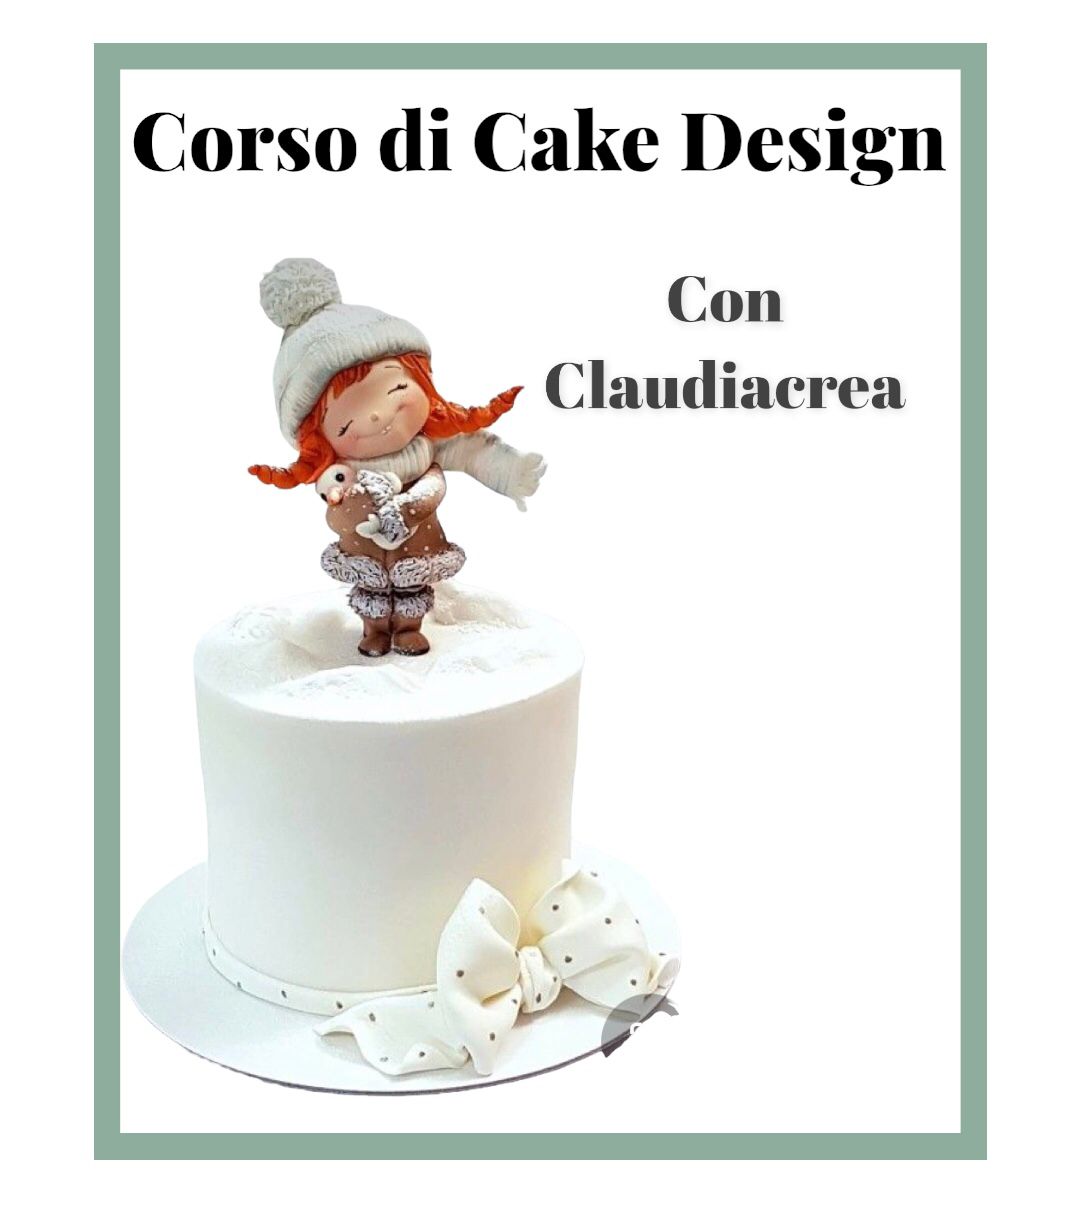 corso-cake-design-claudiacrea-modeling-bambolina